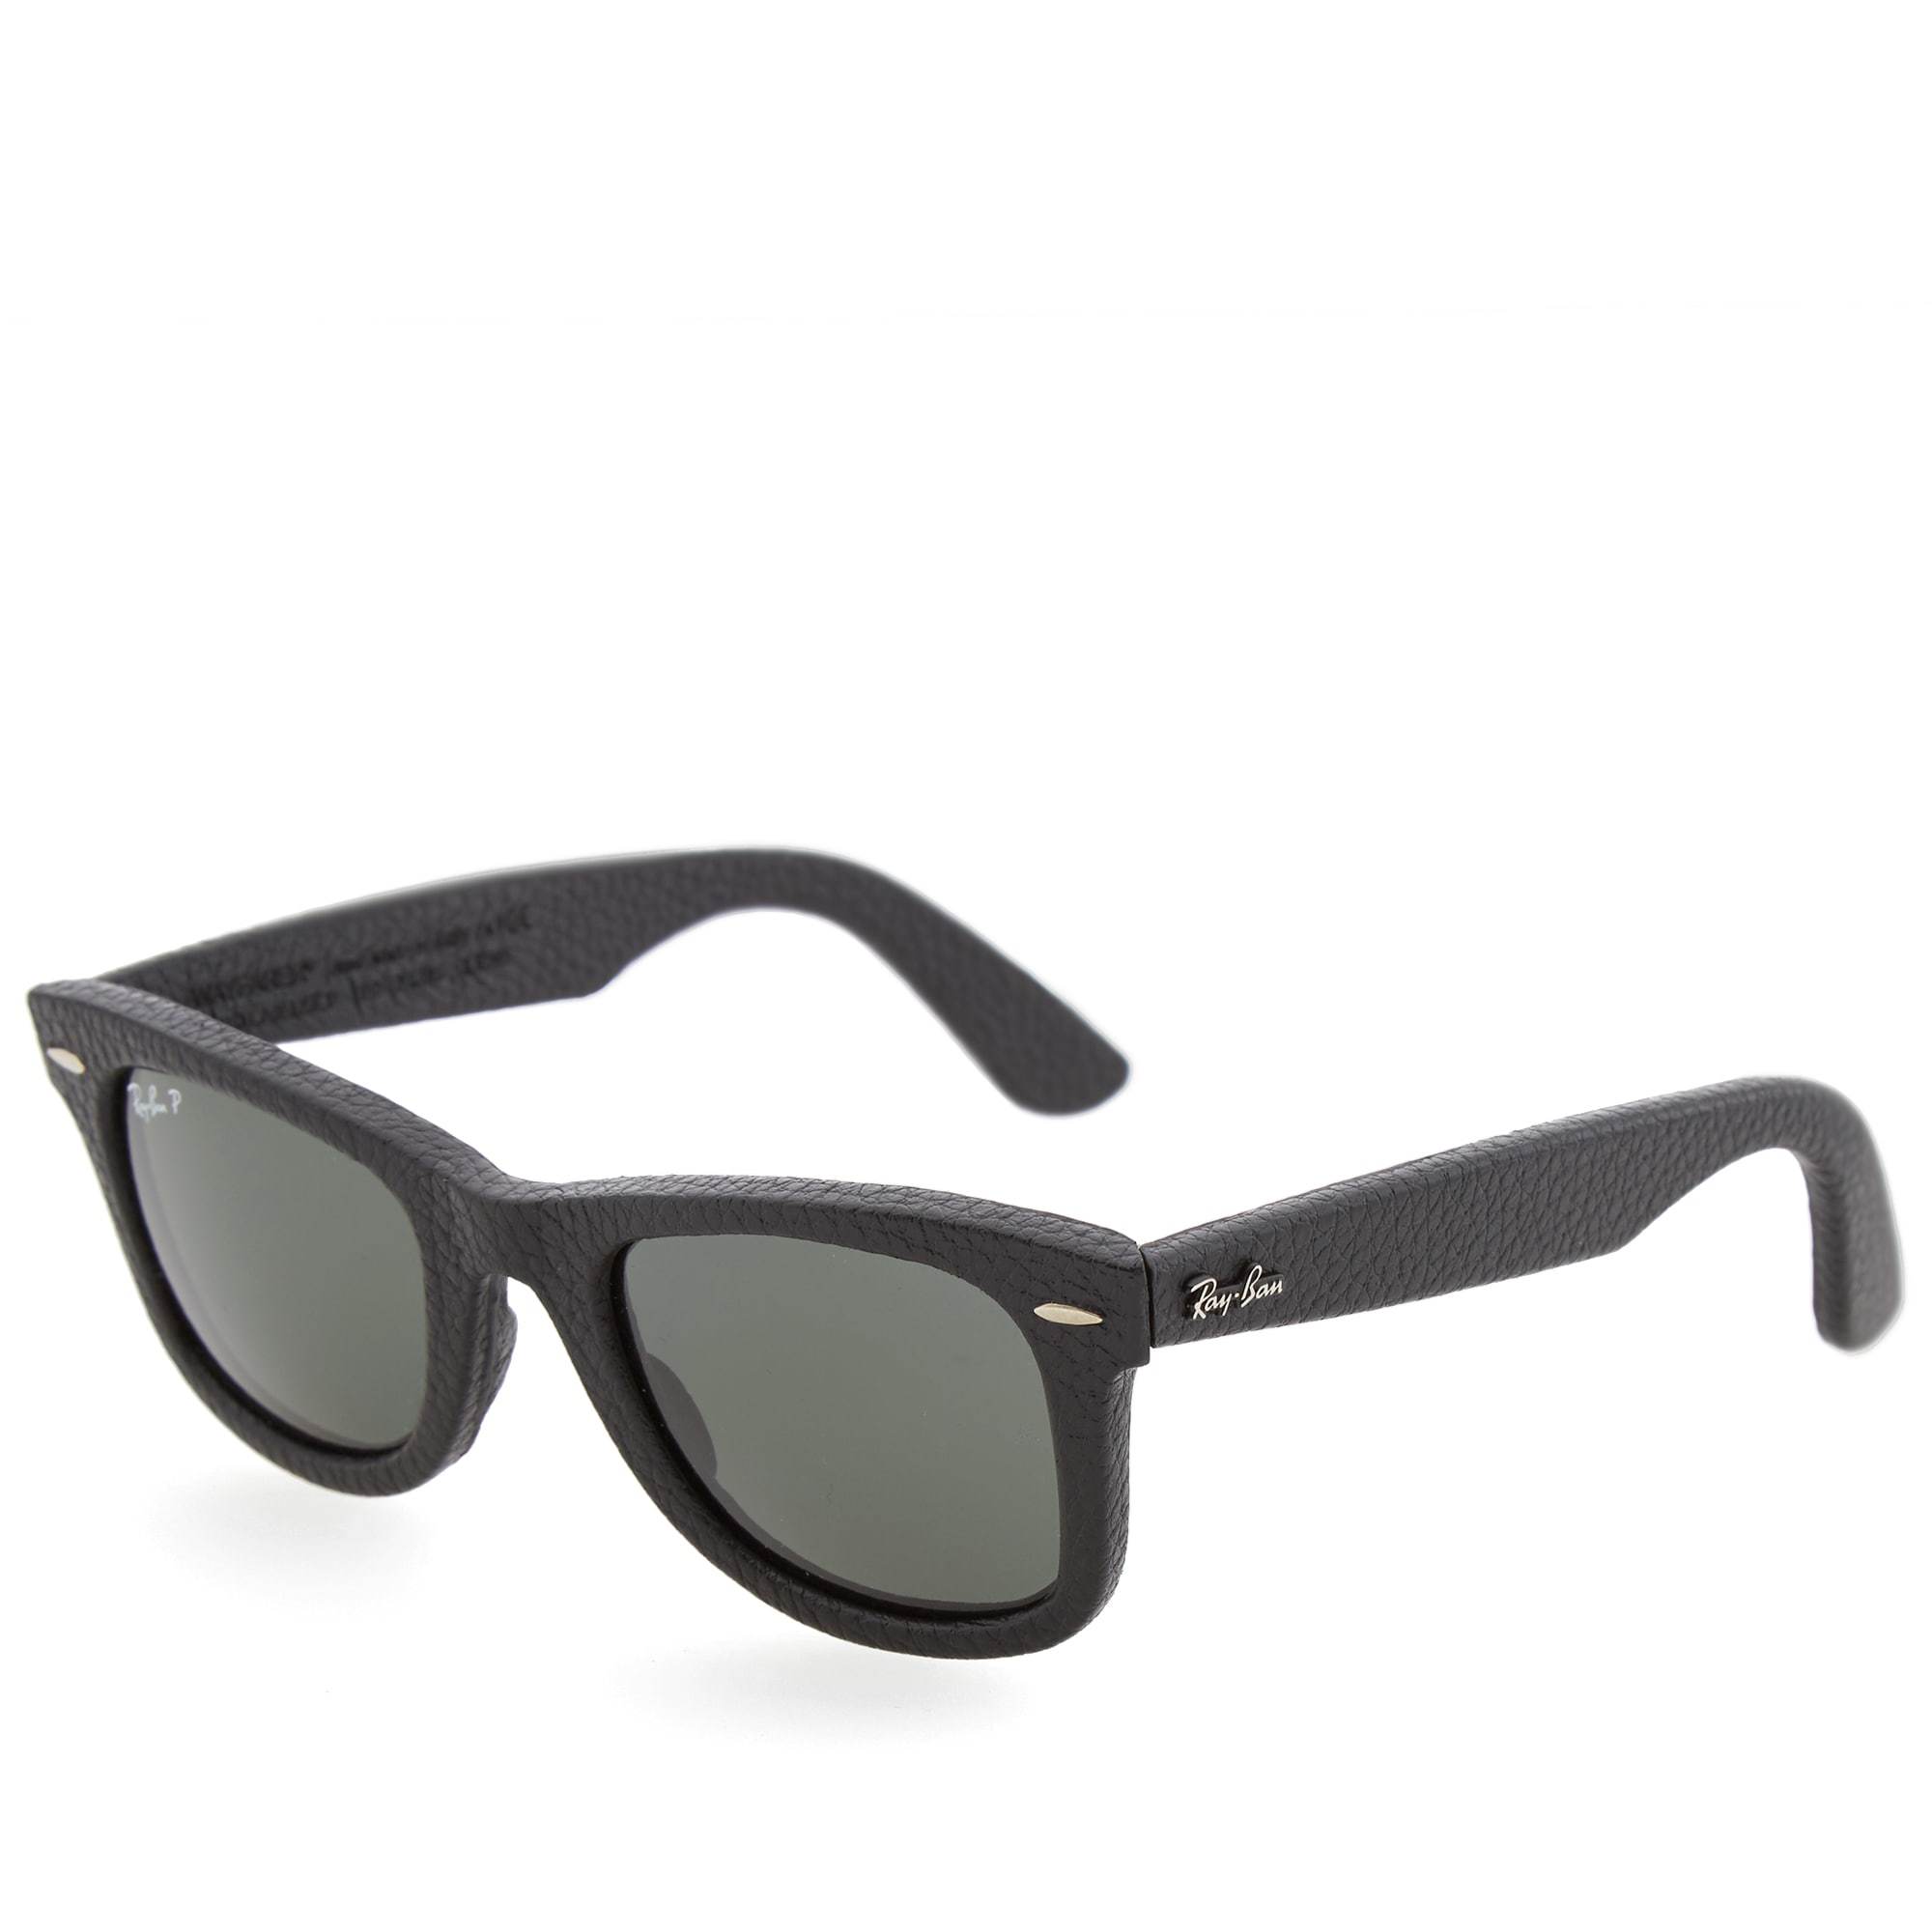 Ray Ban Wayfarer Leather Sunglasses Black Ray Ban